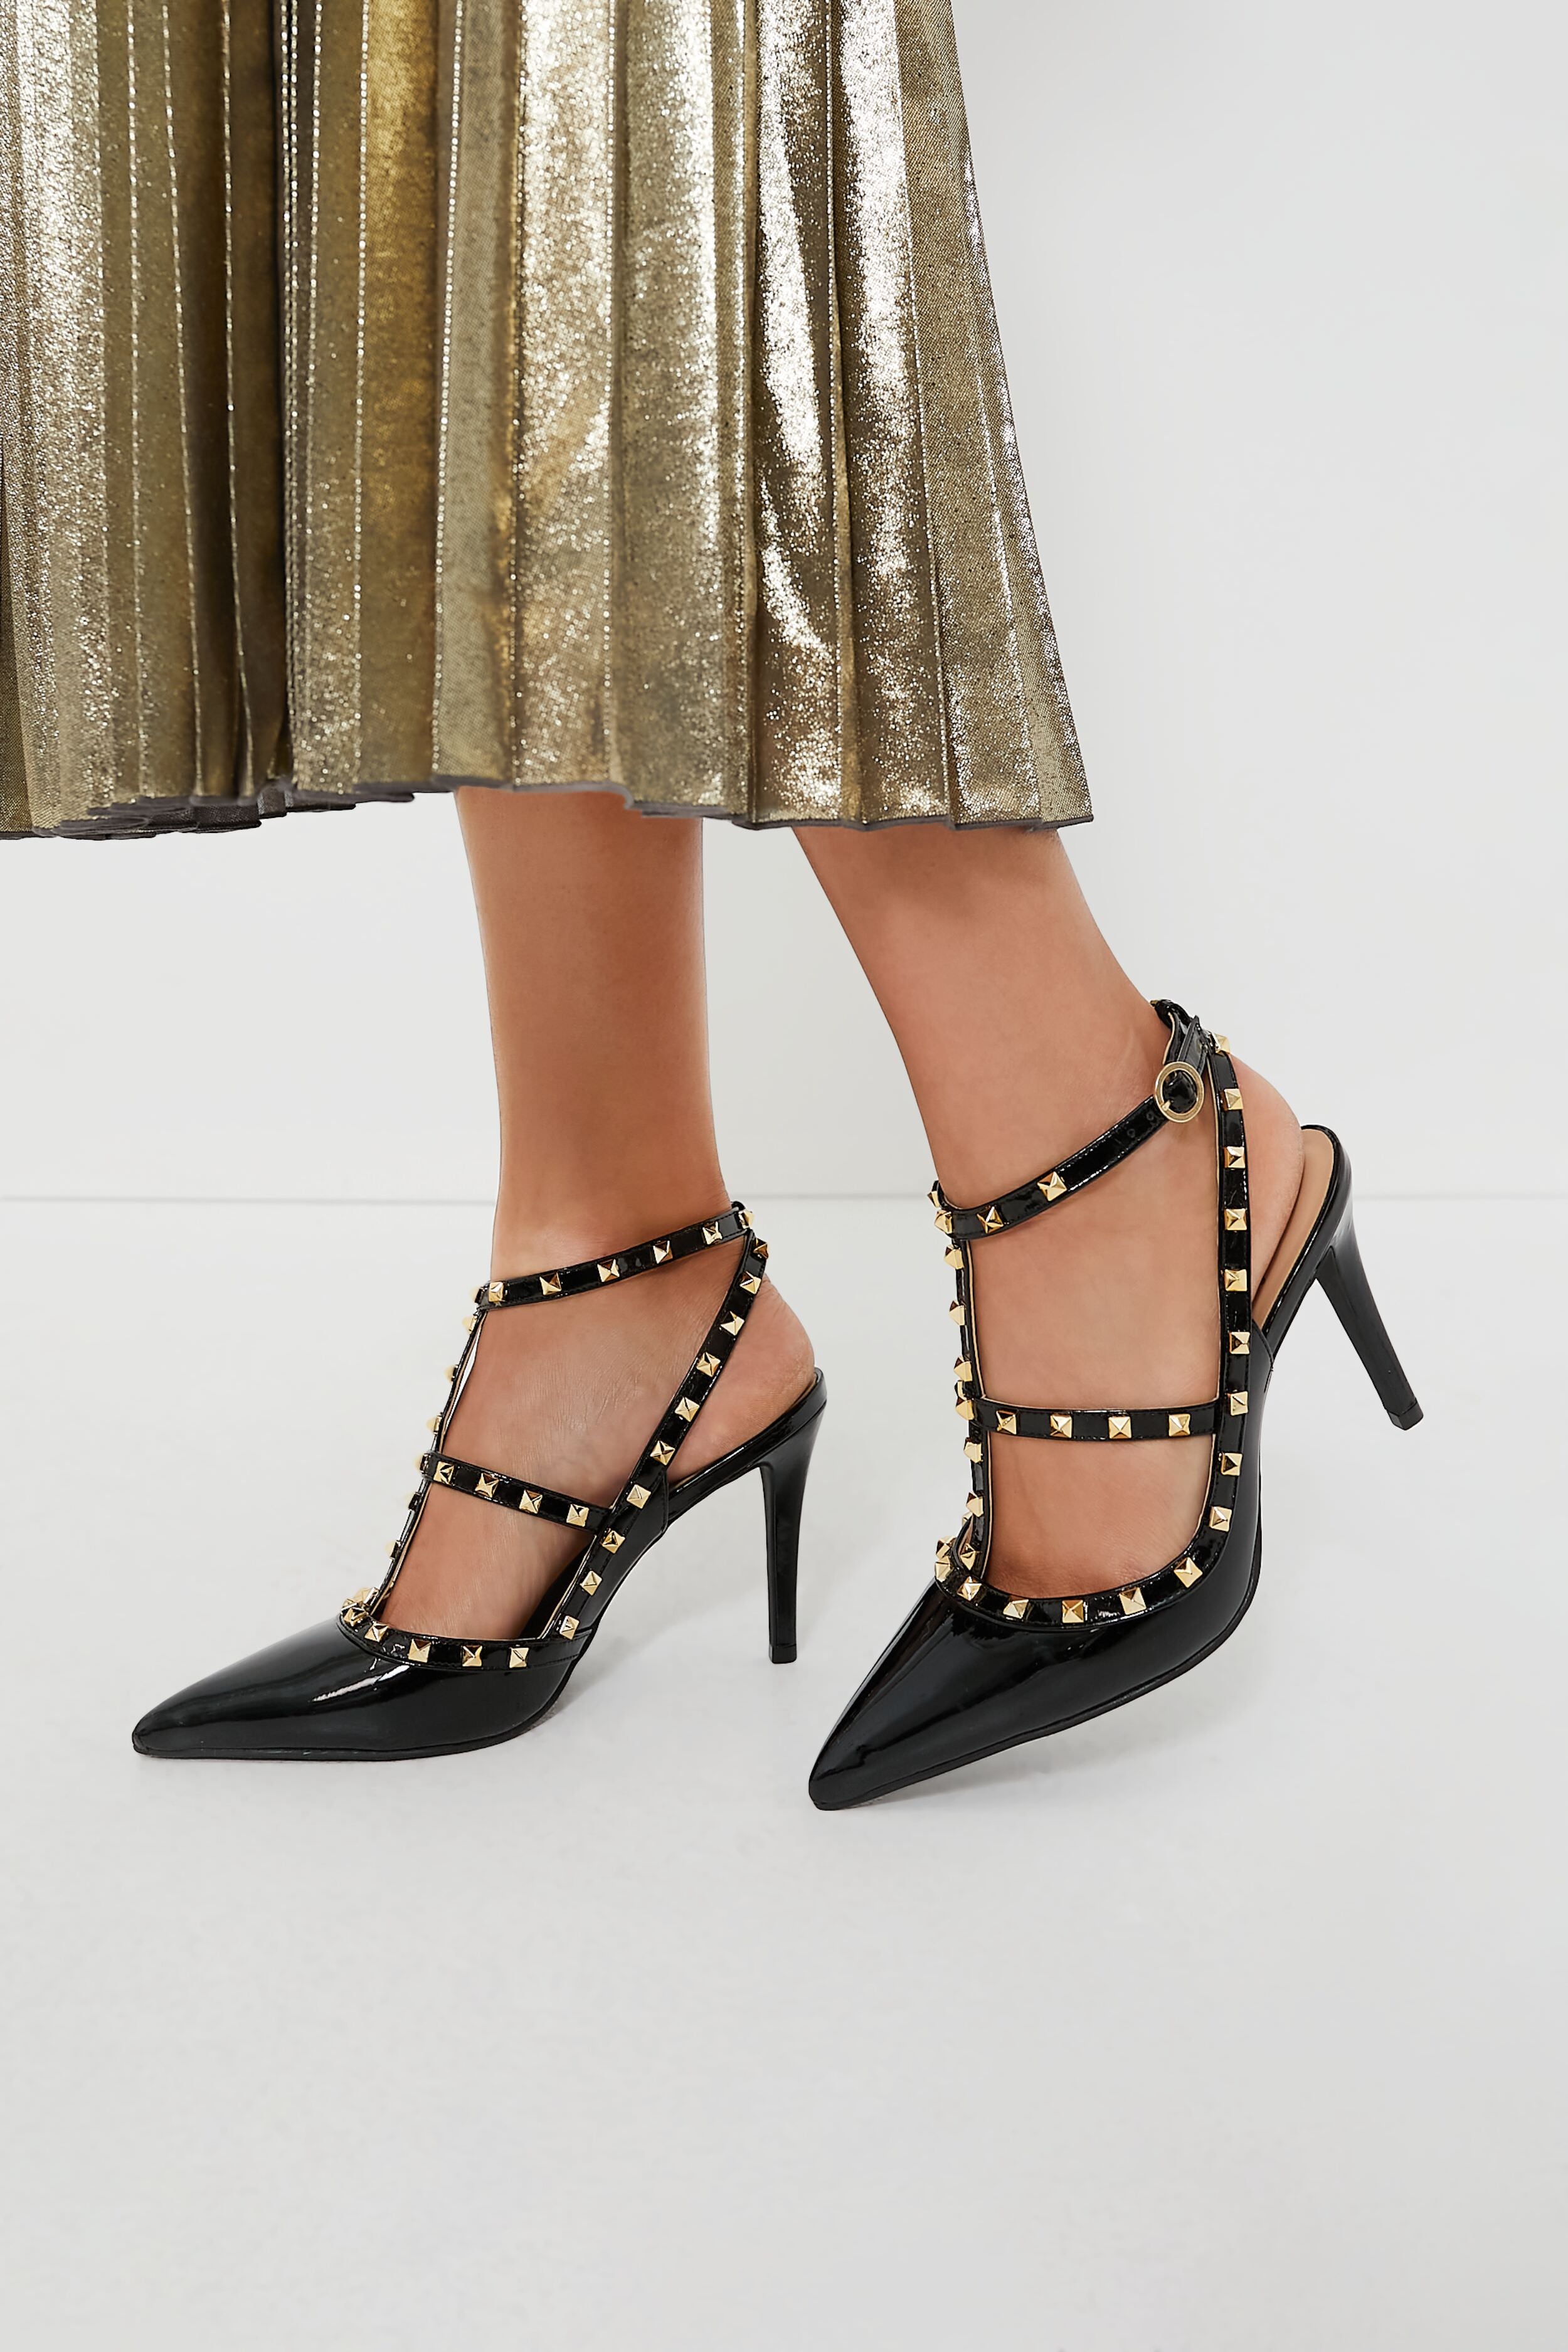 Beige Pointed Toe Studded Stiletto Heels – AX Paris